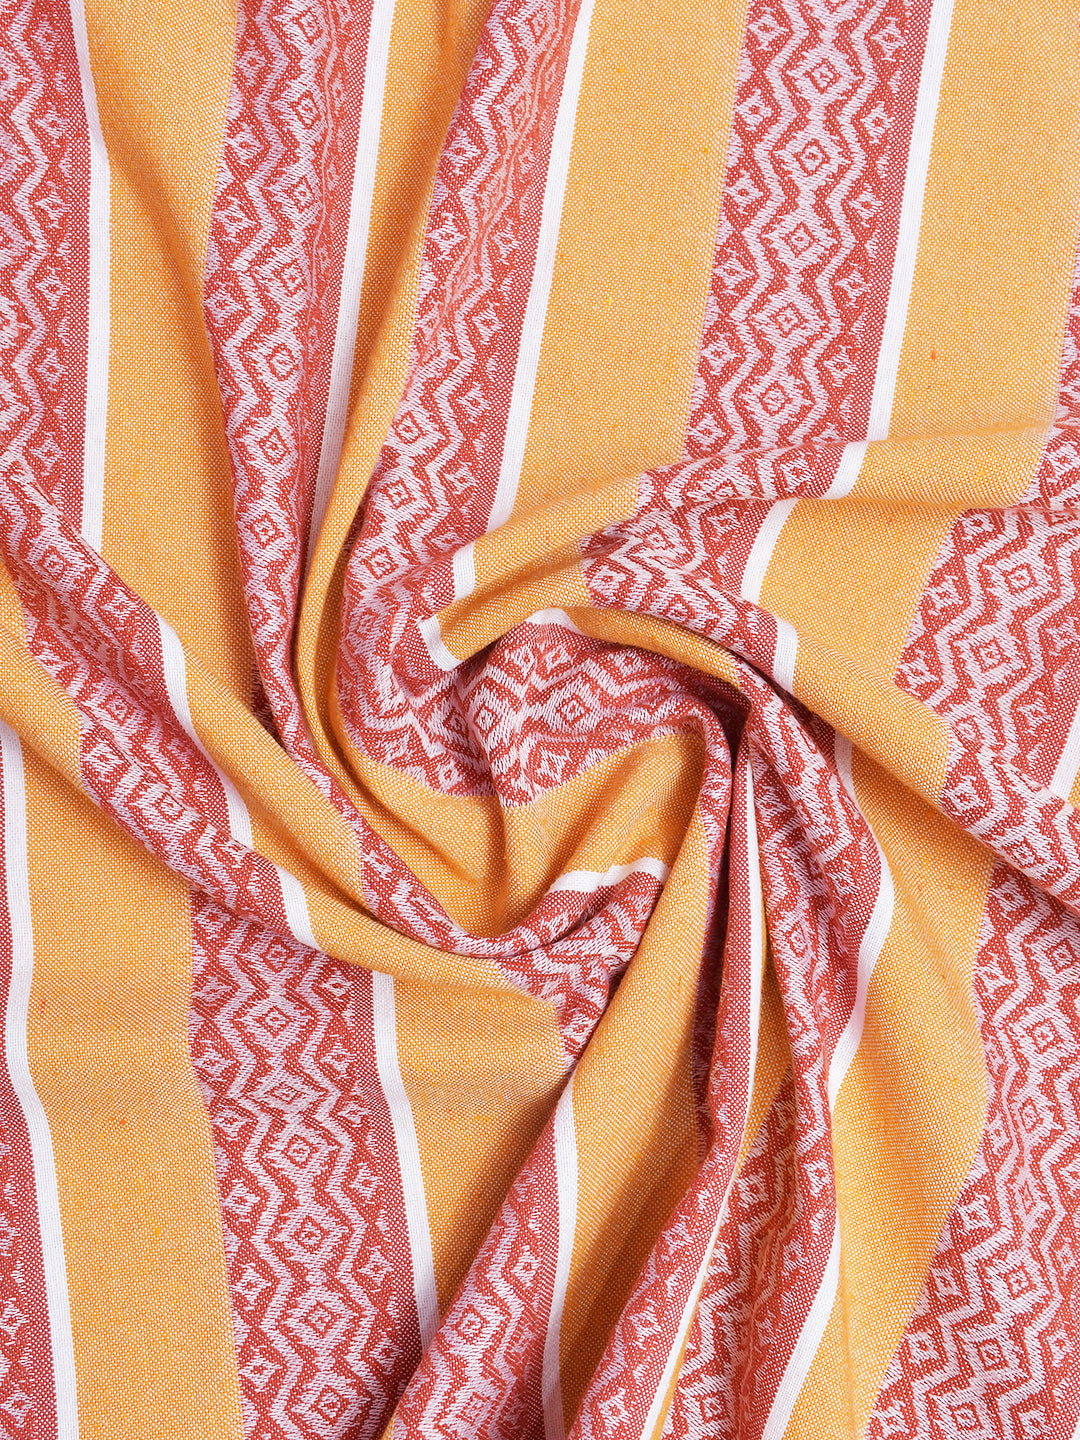 Blanc9 Sunrise Jacquard Orange Cotton Double Bedsheet with Pillows